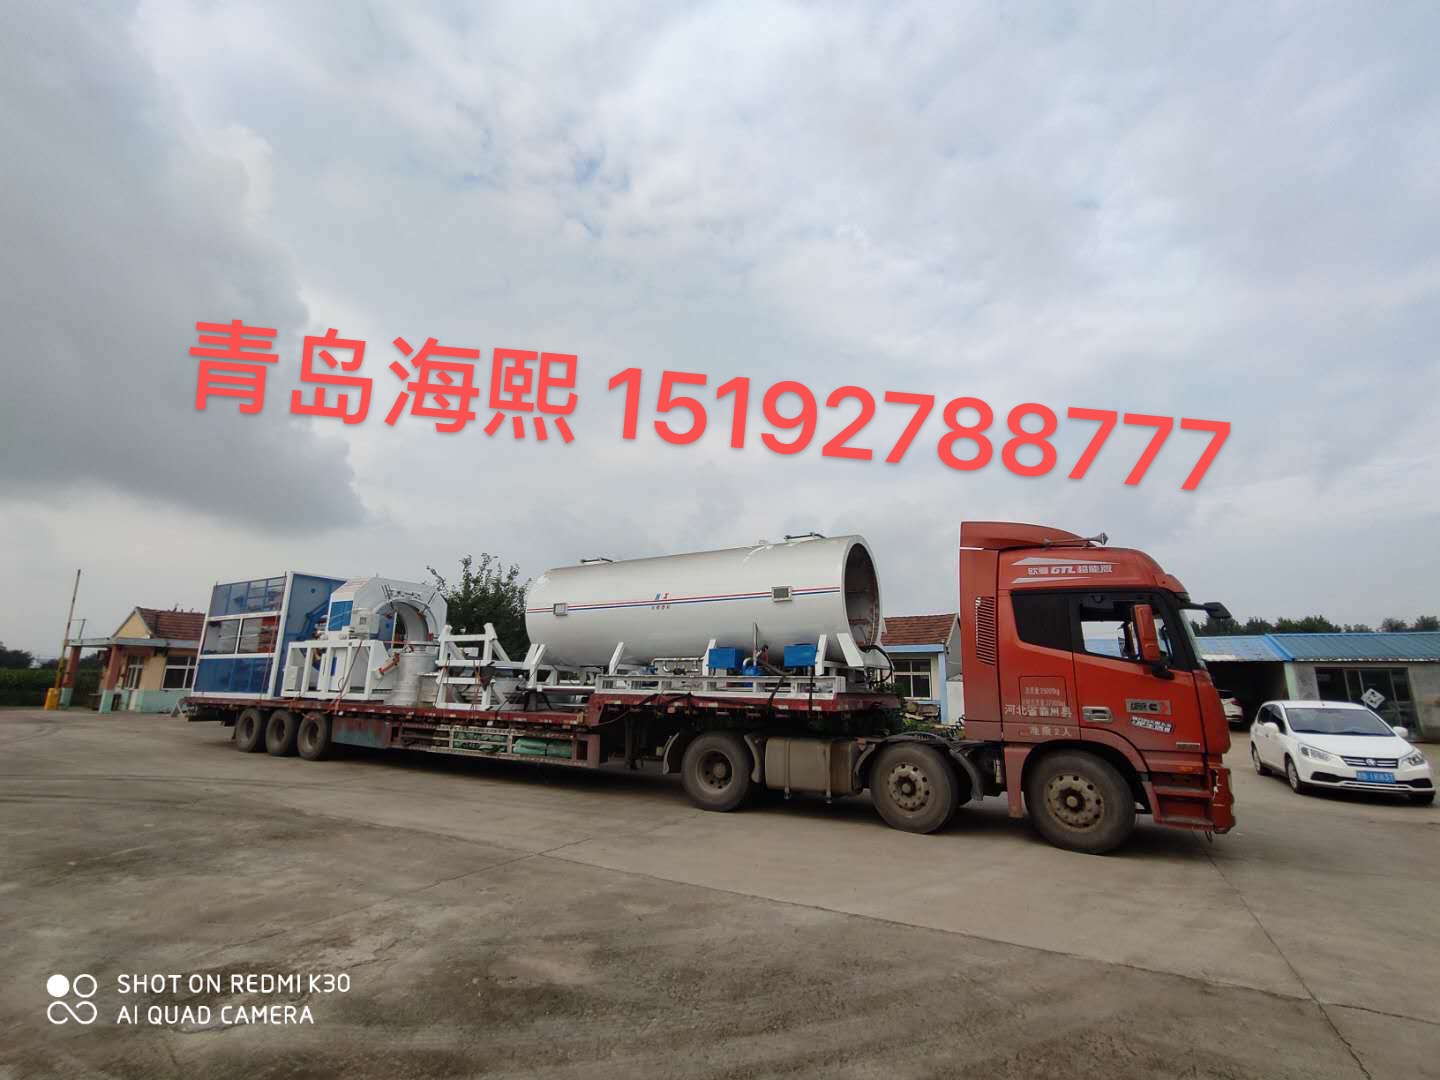 Hebei Haoshun pipeline equipment manufacturing Co.